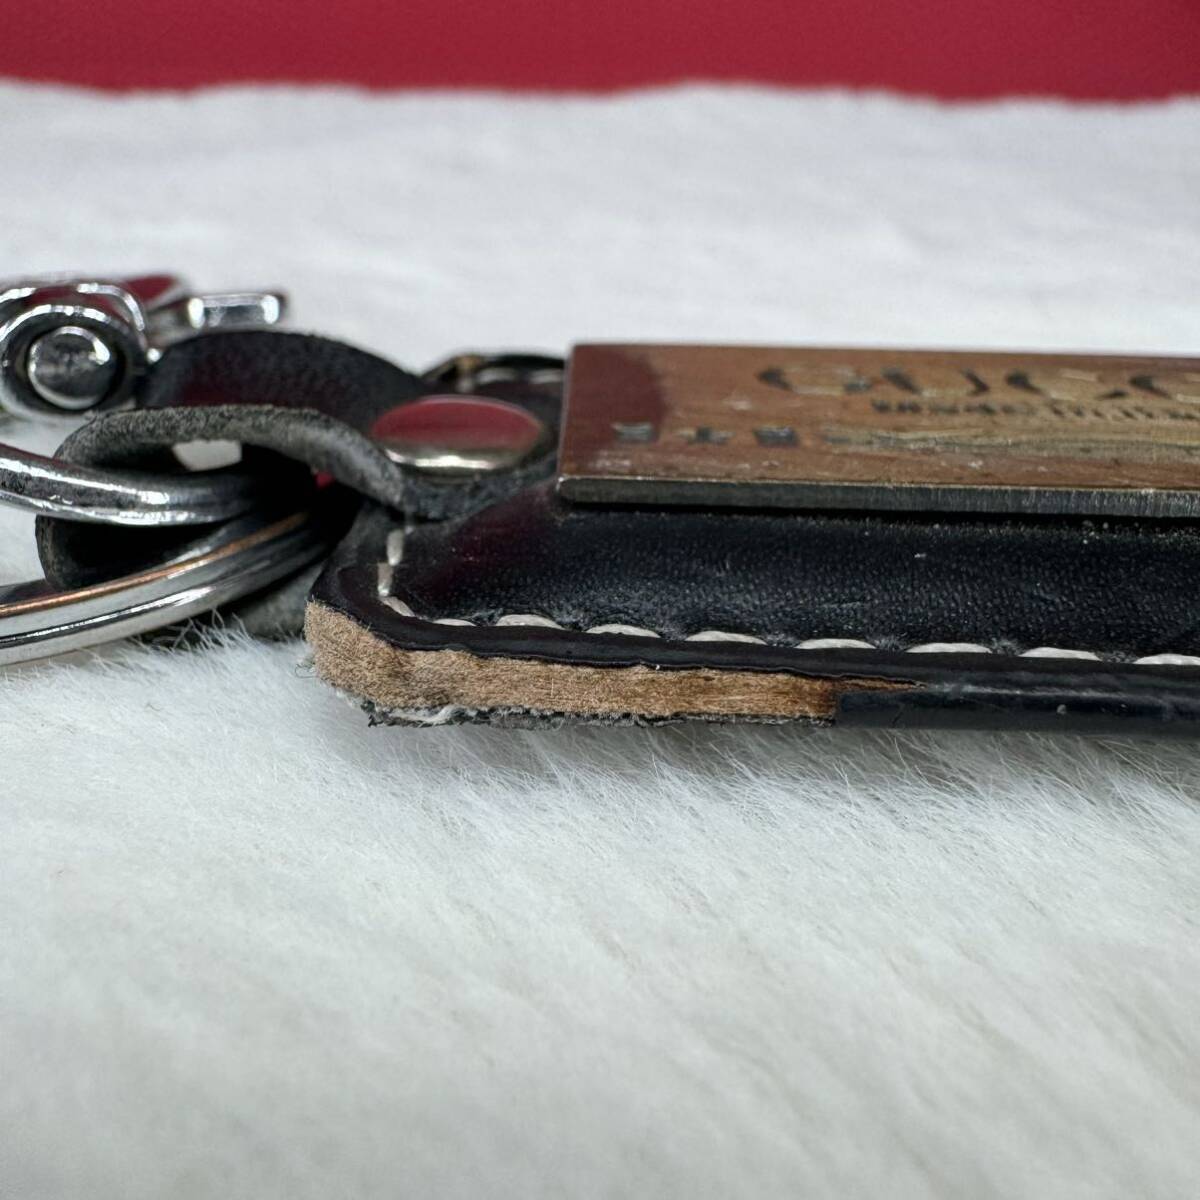 GUCCI Gucci leather key ring Inter locking key holder 